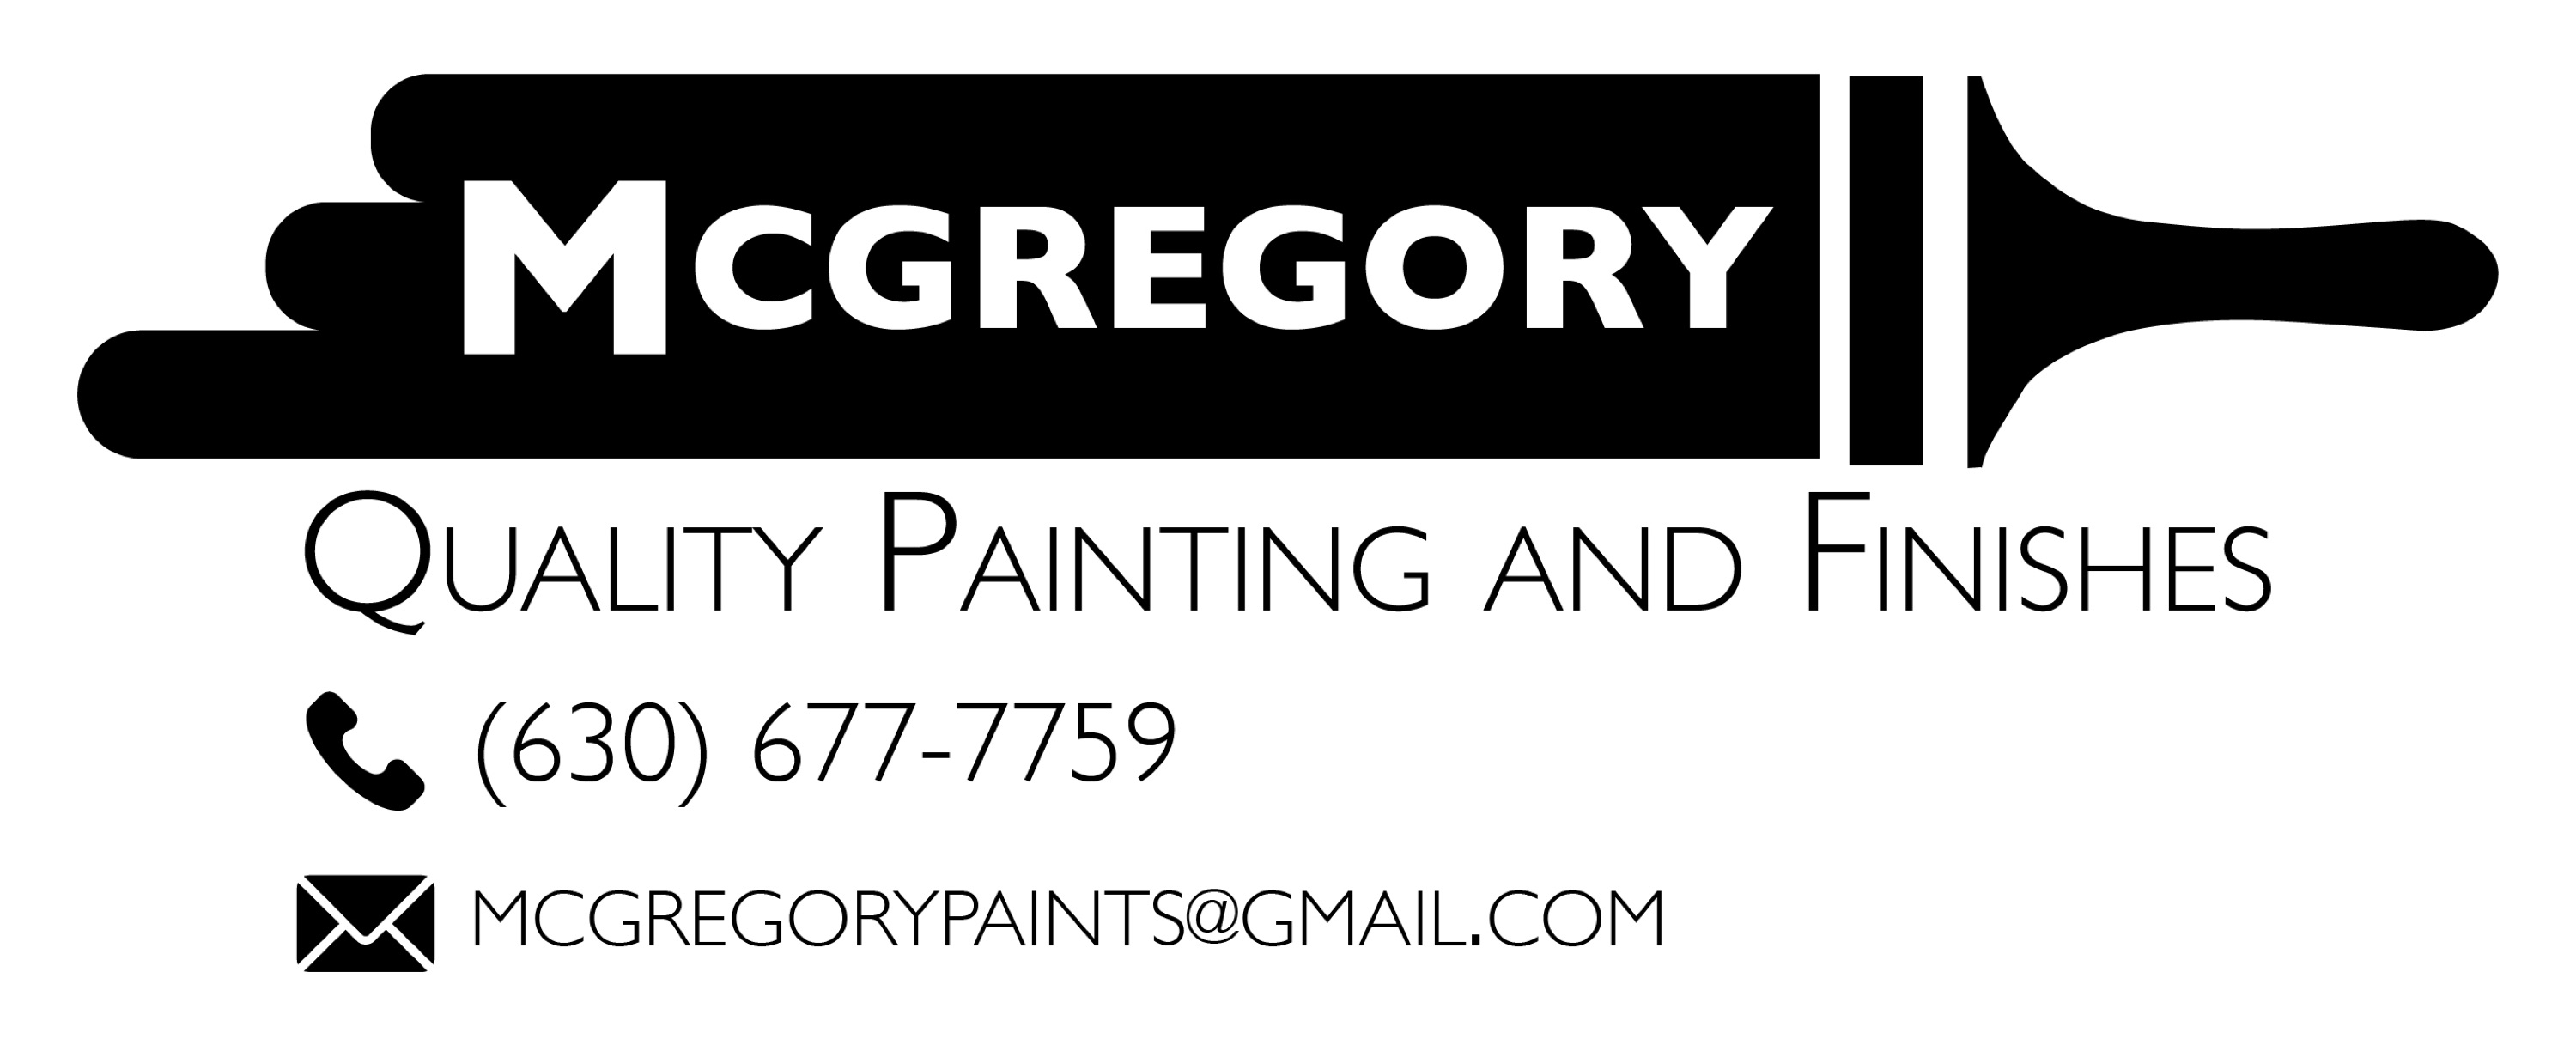 McGregory Quality Painting & Finishes Logo